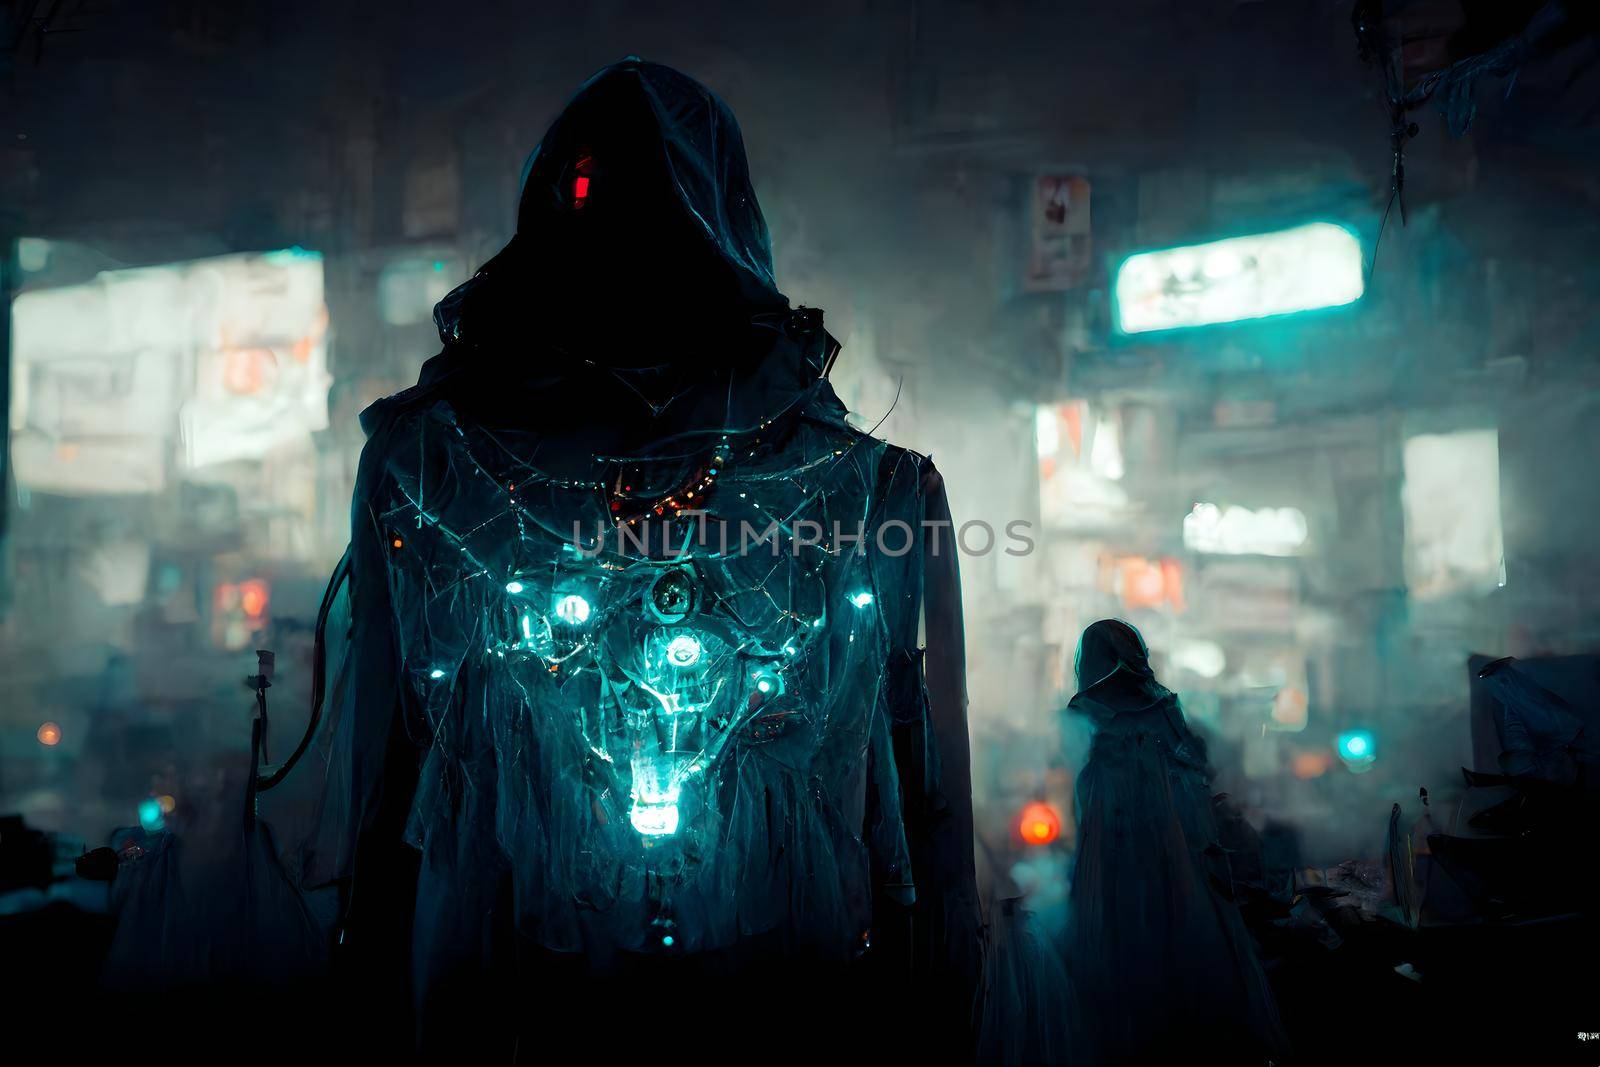 dark cybermage, cyberpunk sorcerer in a cloak with a hood, neural network generated art by z1b